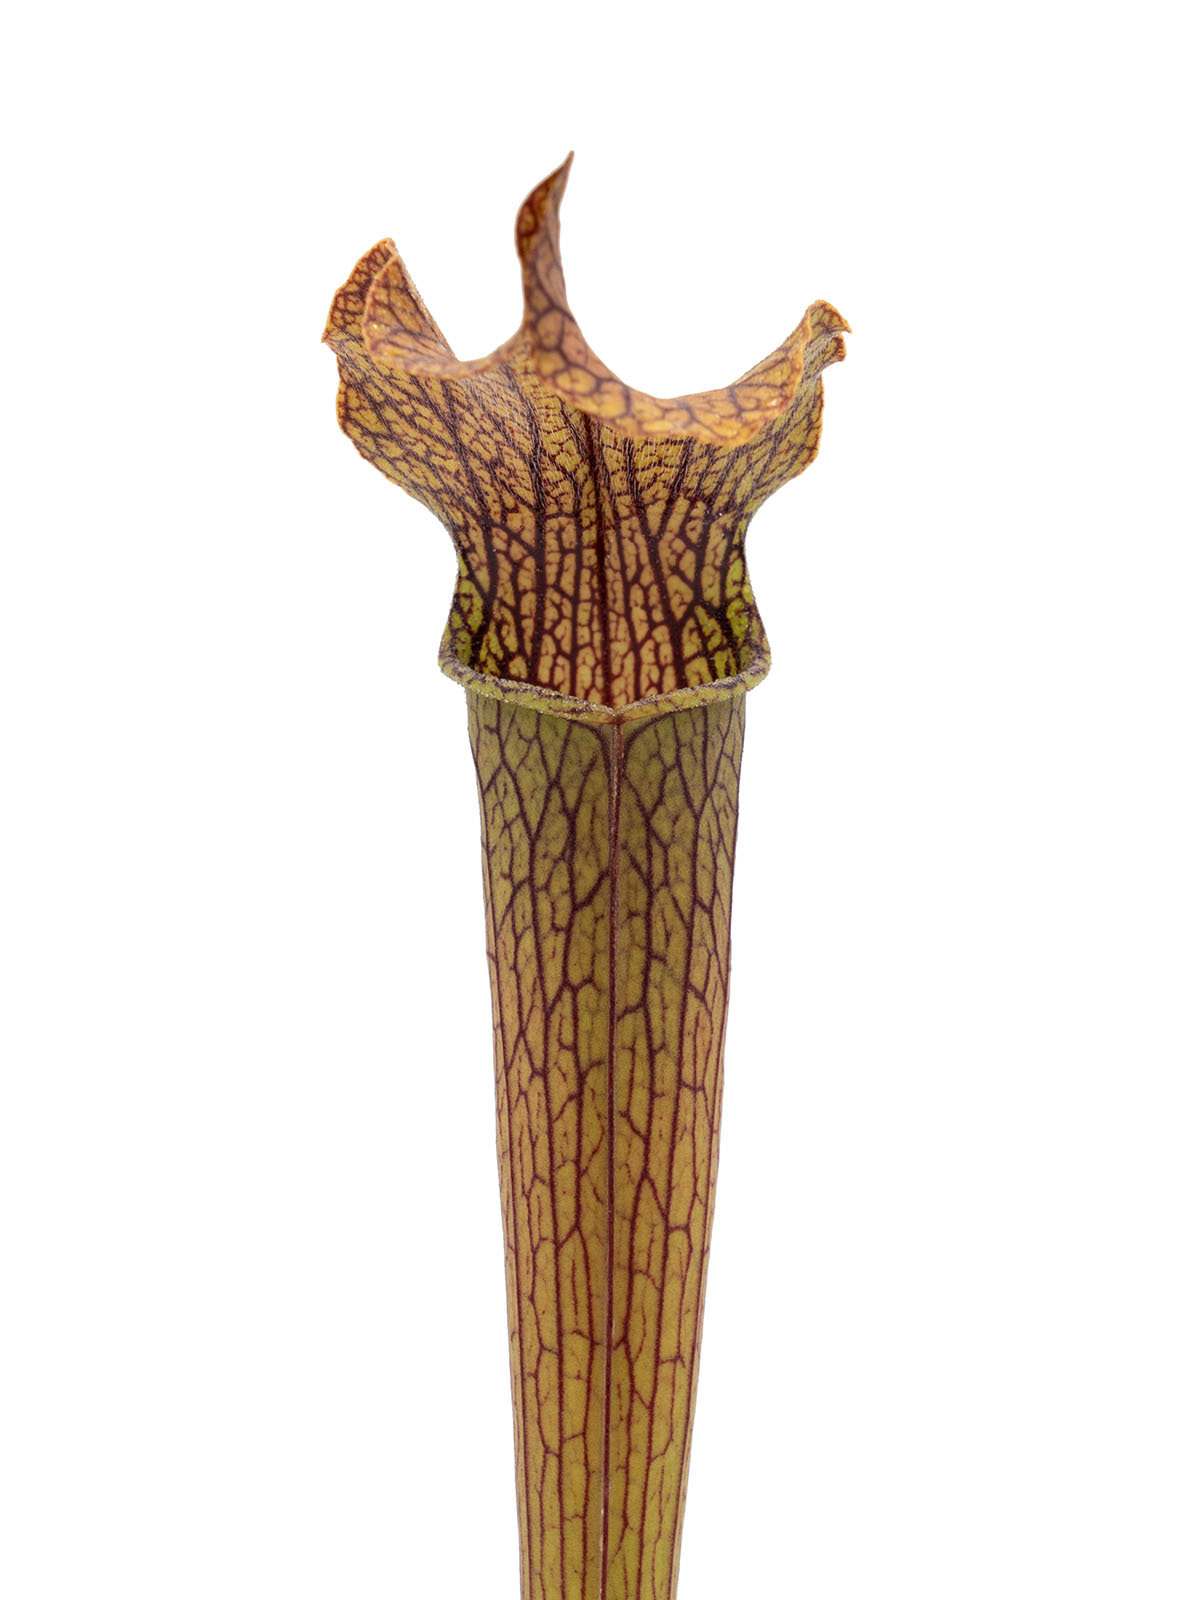 Sarracenia rubra ssp. gulfensis - dark tall pitchers